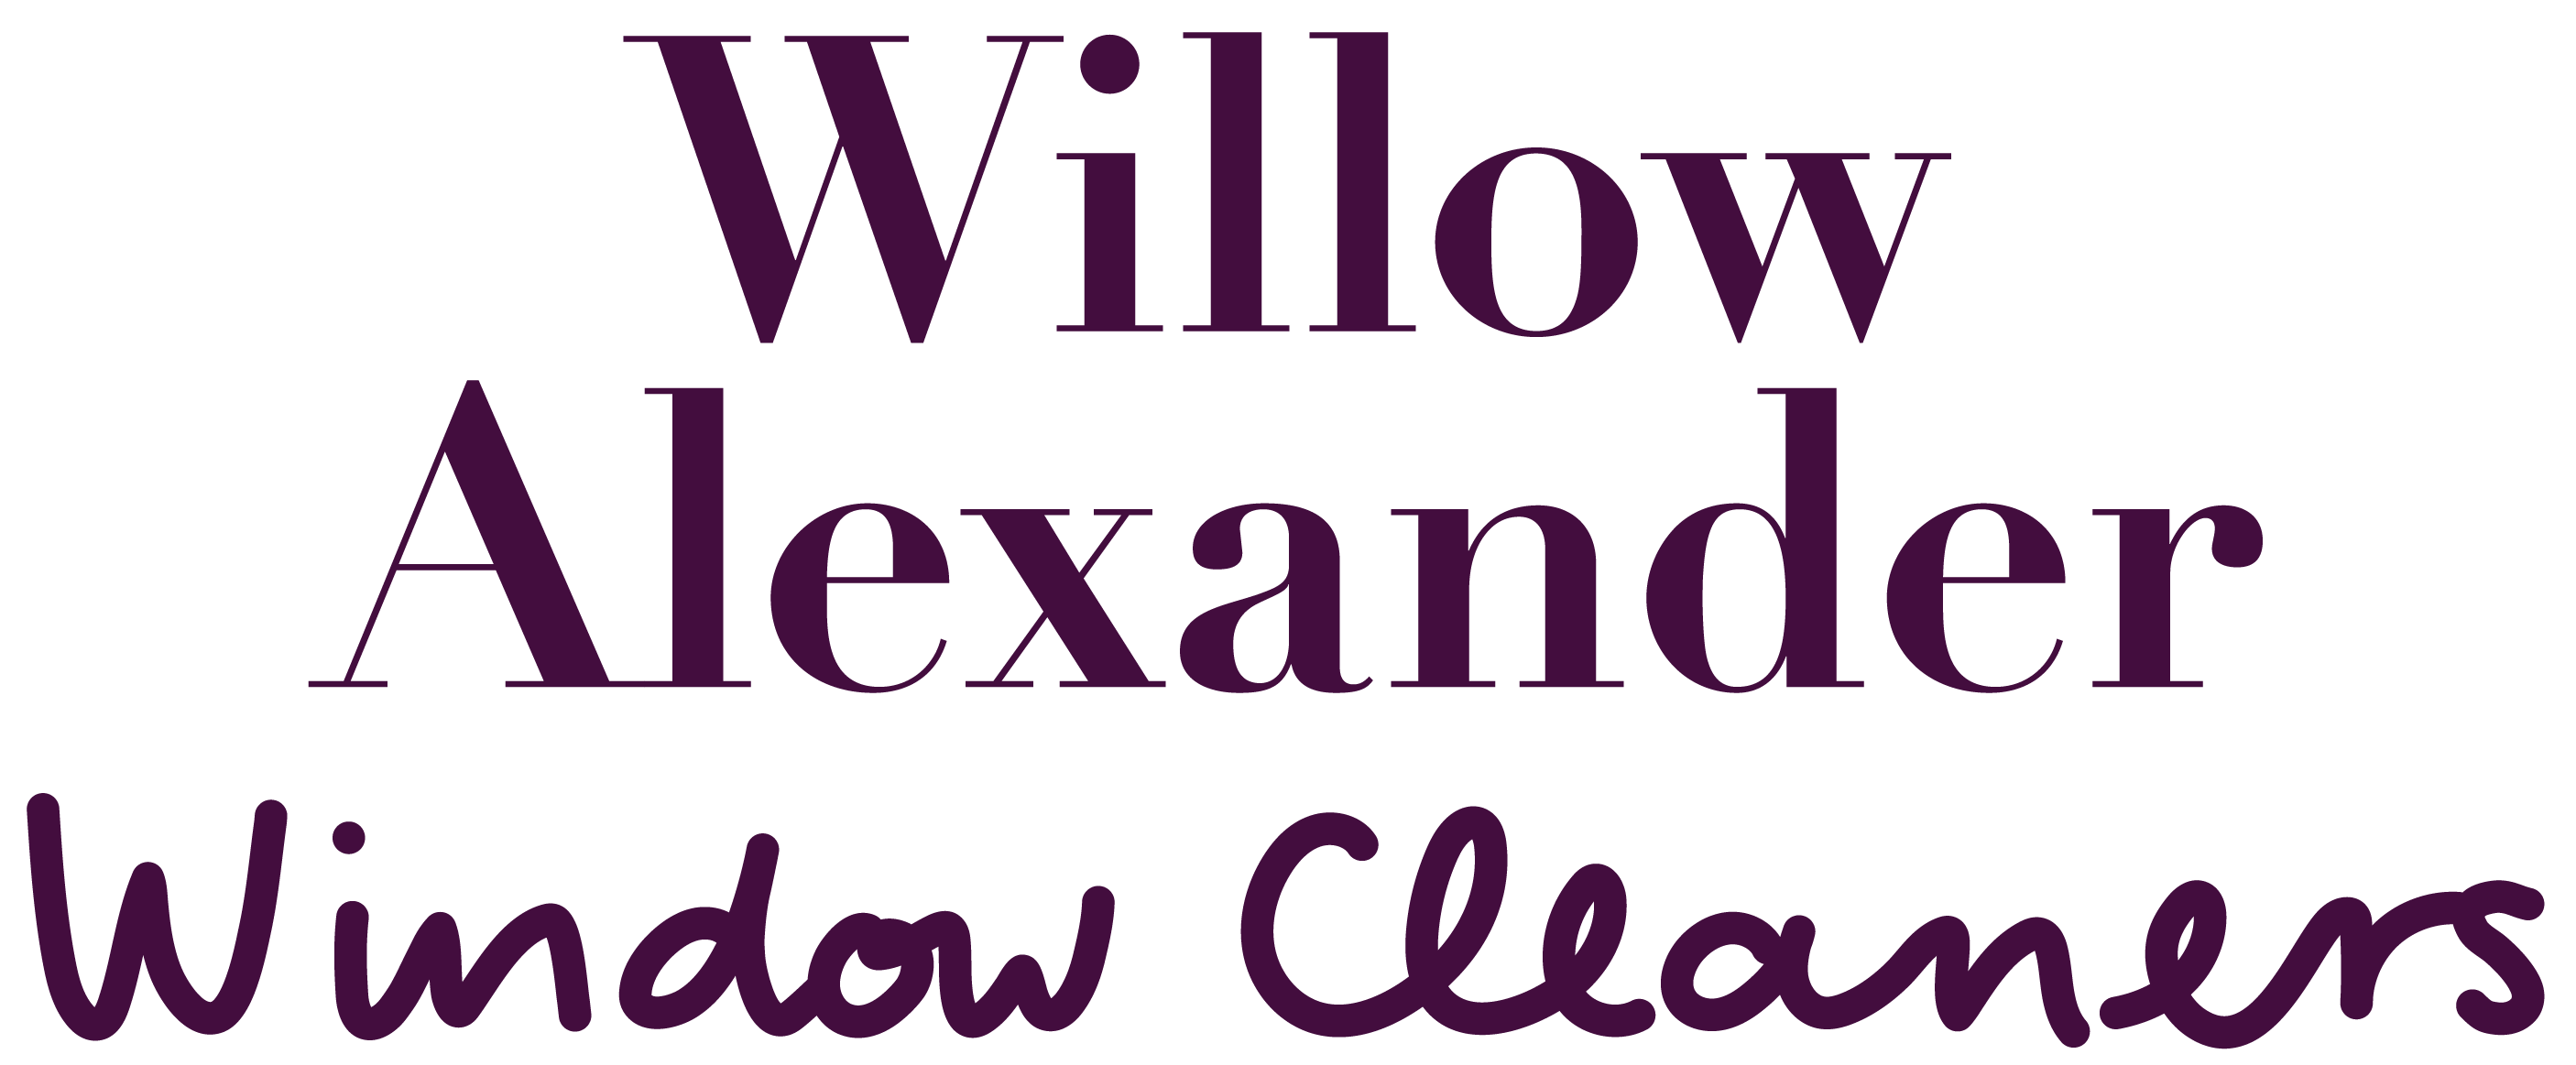 Willow Alexander Window Cleaners